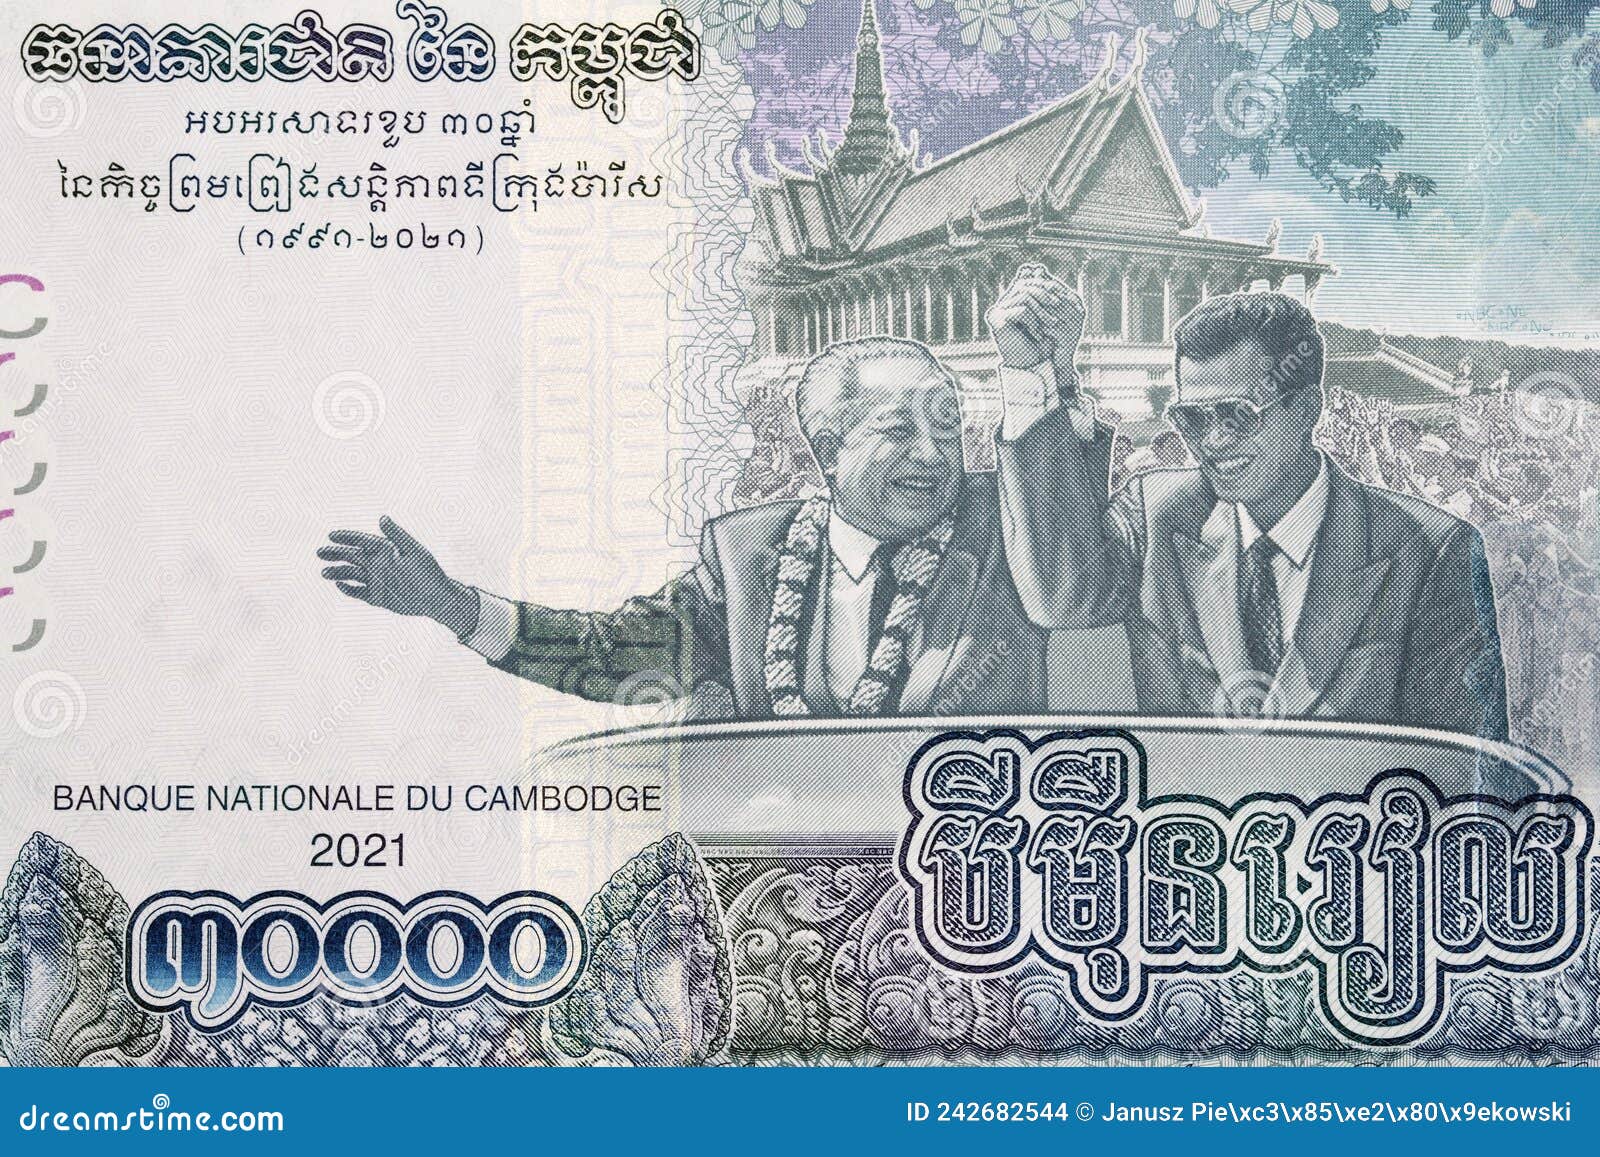 norodom sihanouk and samdech techo hun sen from cambodian money